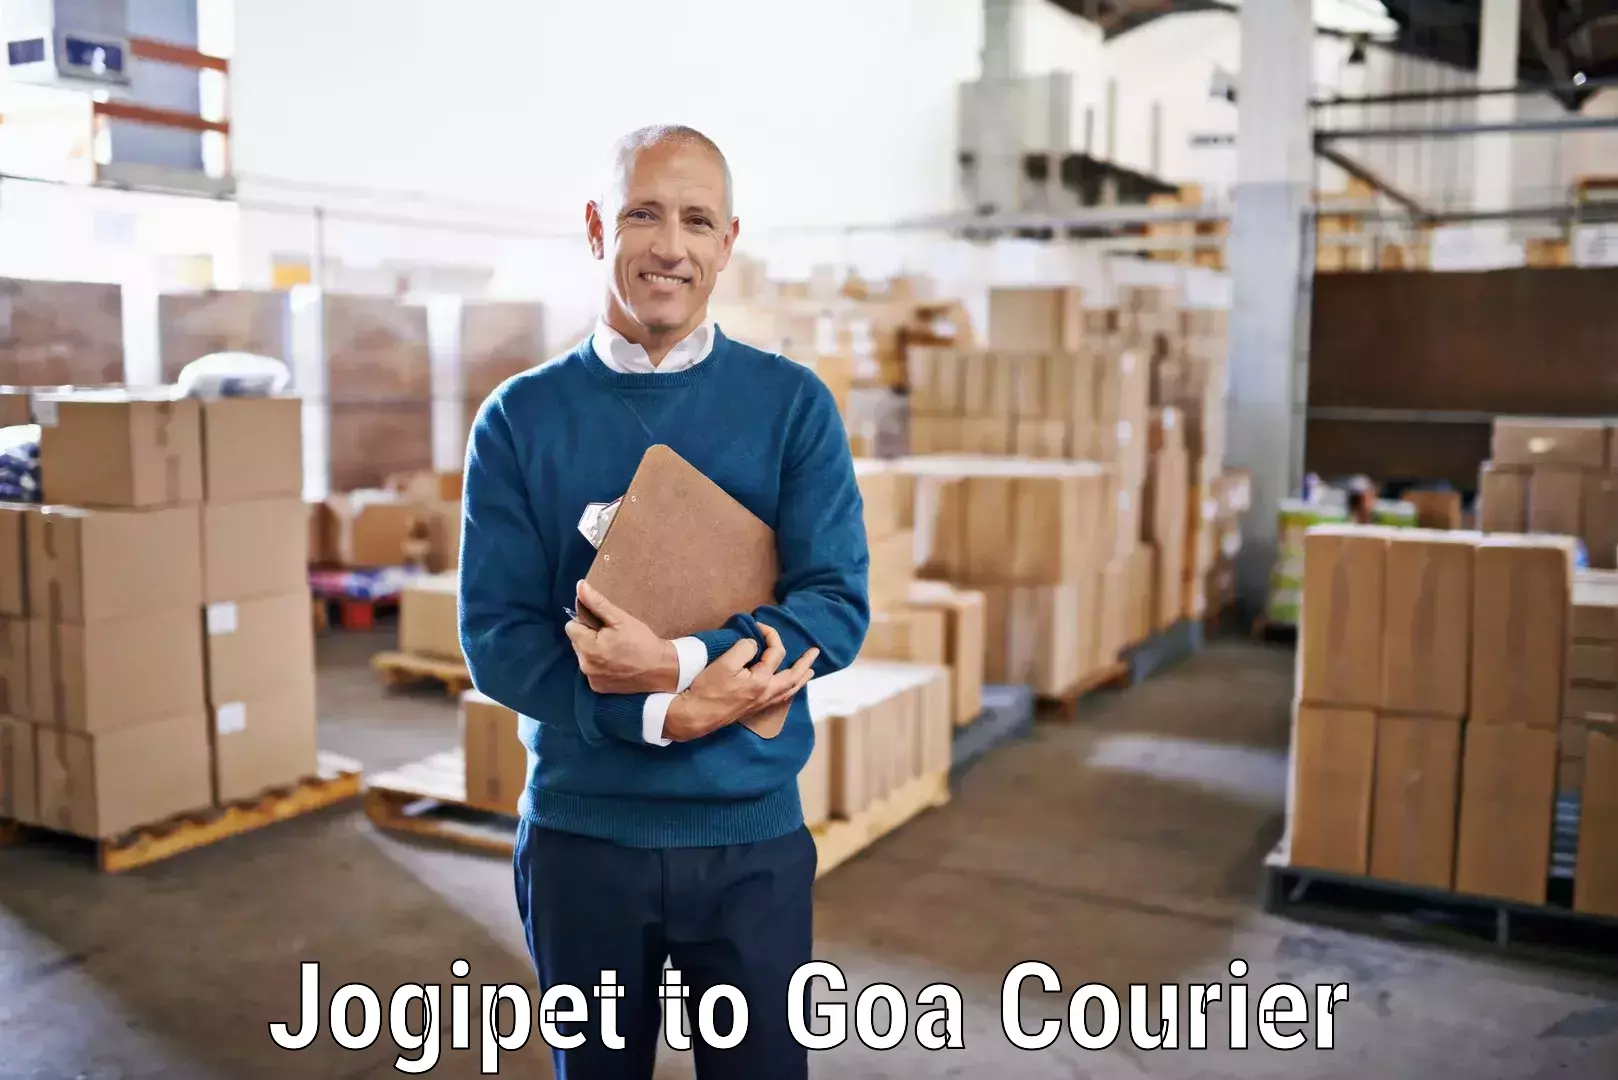 Global logistics network Jogipet to Goa